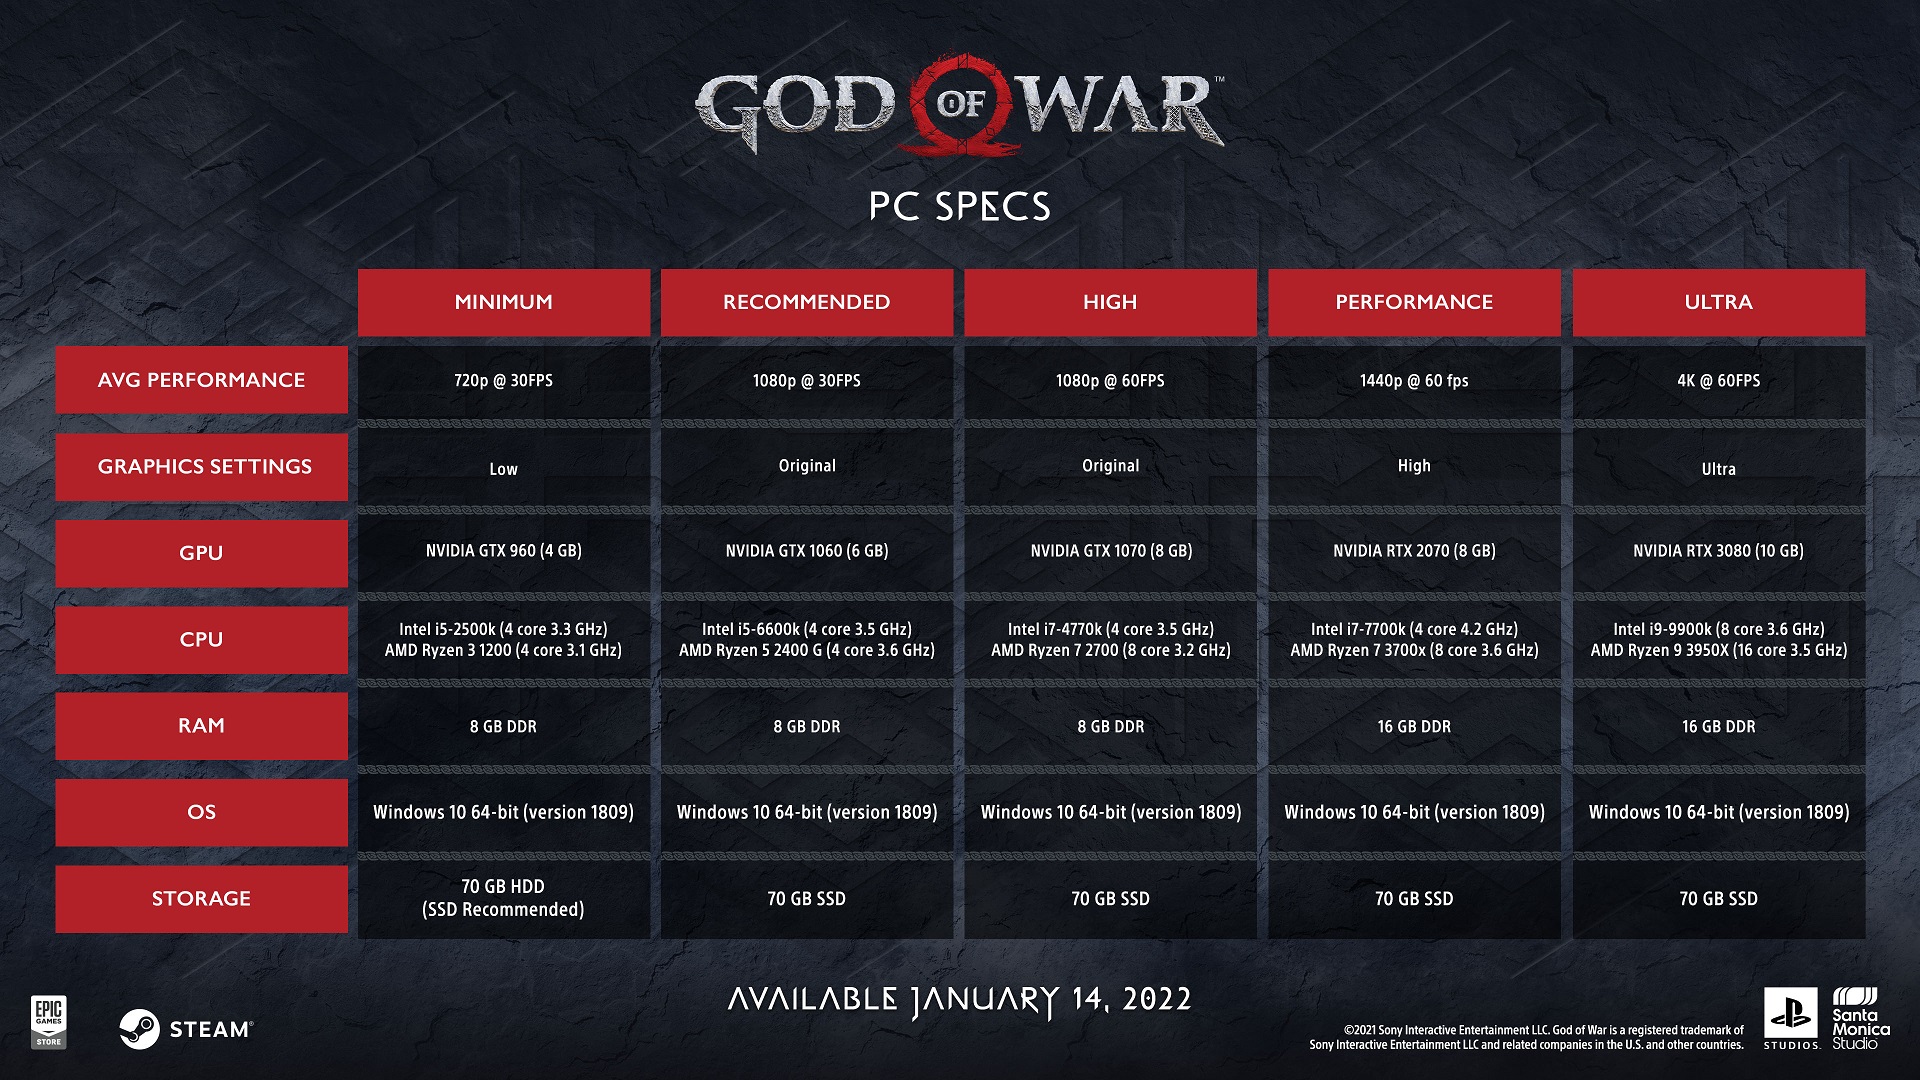 God of War PC's best settings for high FPS